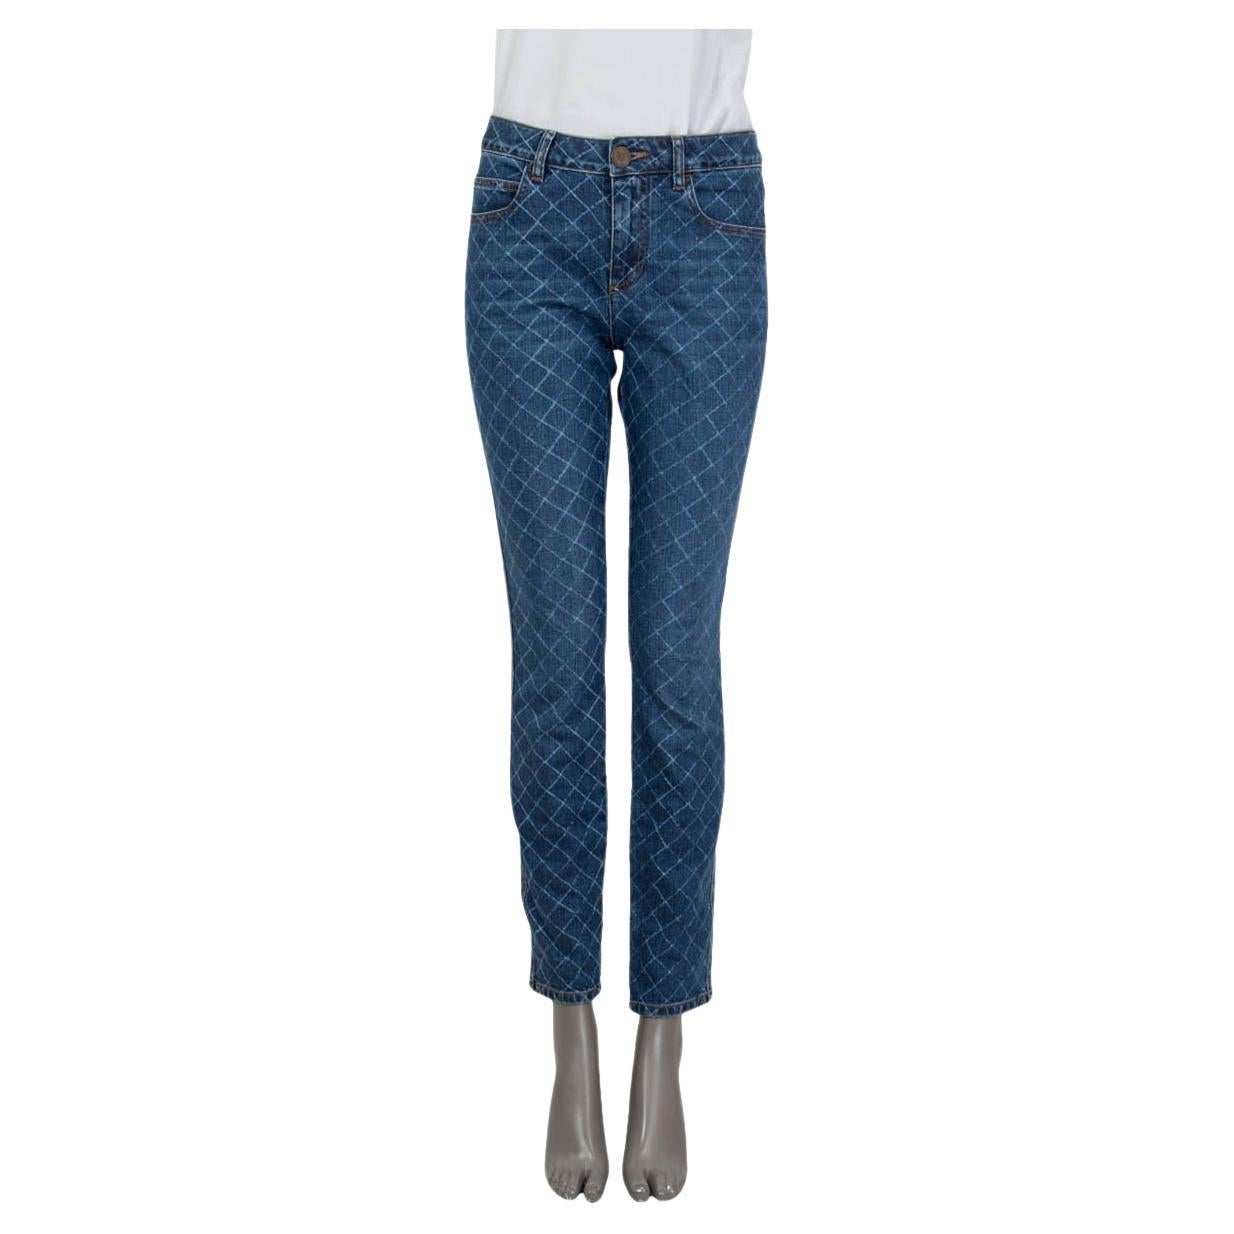 CHANEL blue cotton Denim 2017 QUILTED PRINT Jeans Pants 36 XS